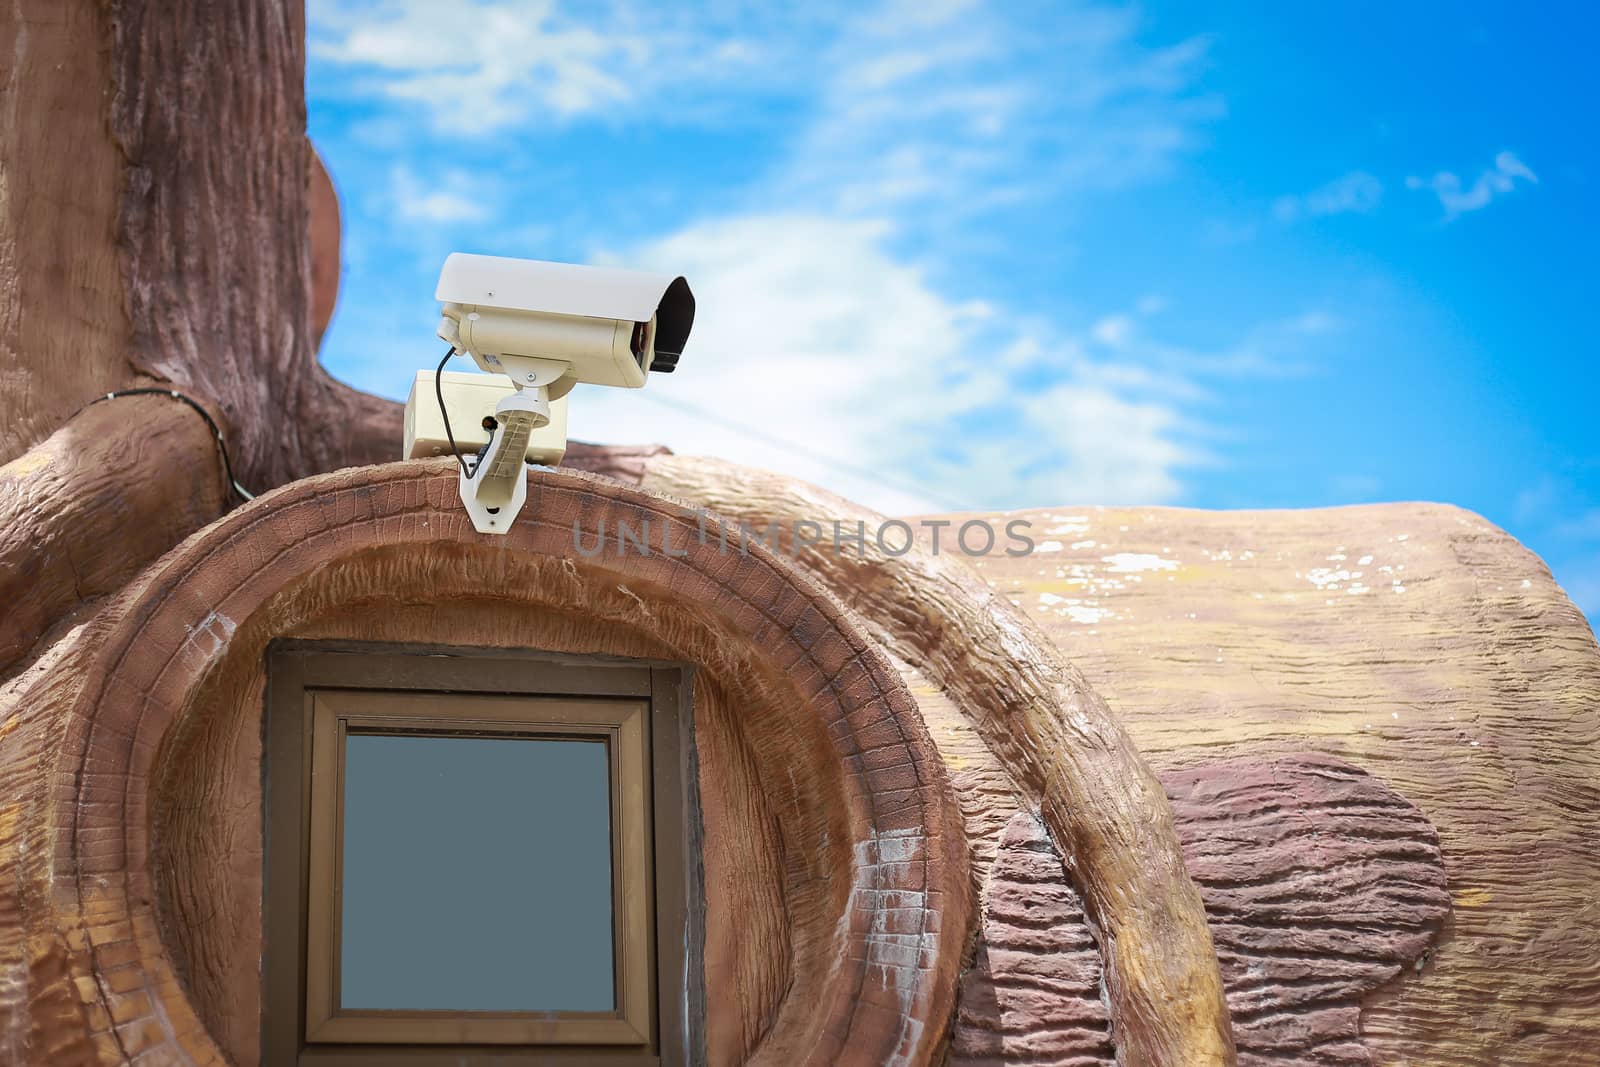 CCTV on window by powerbeephoto